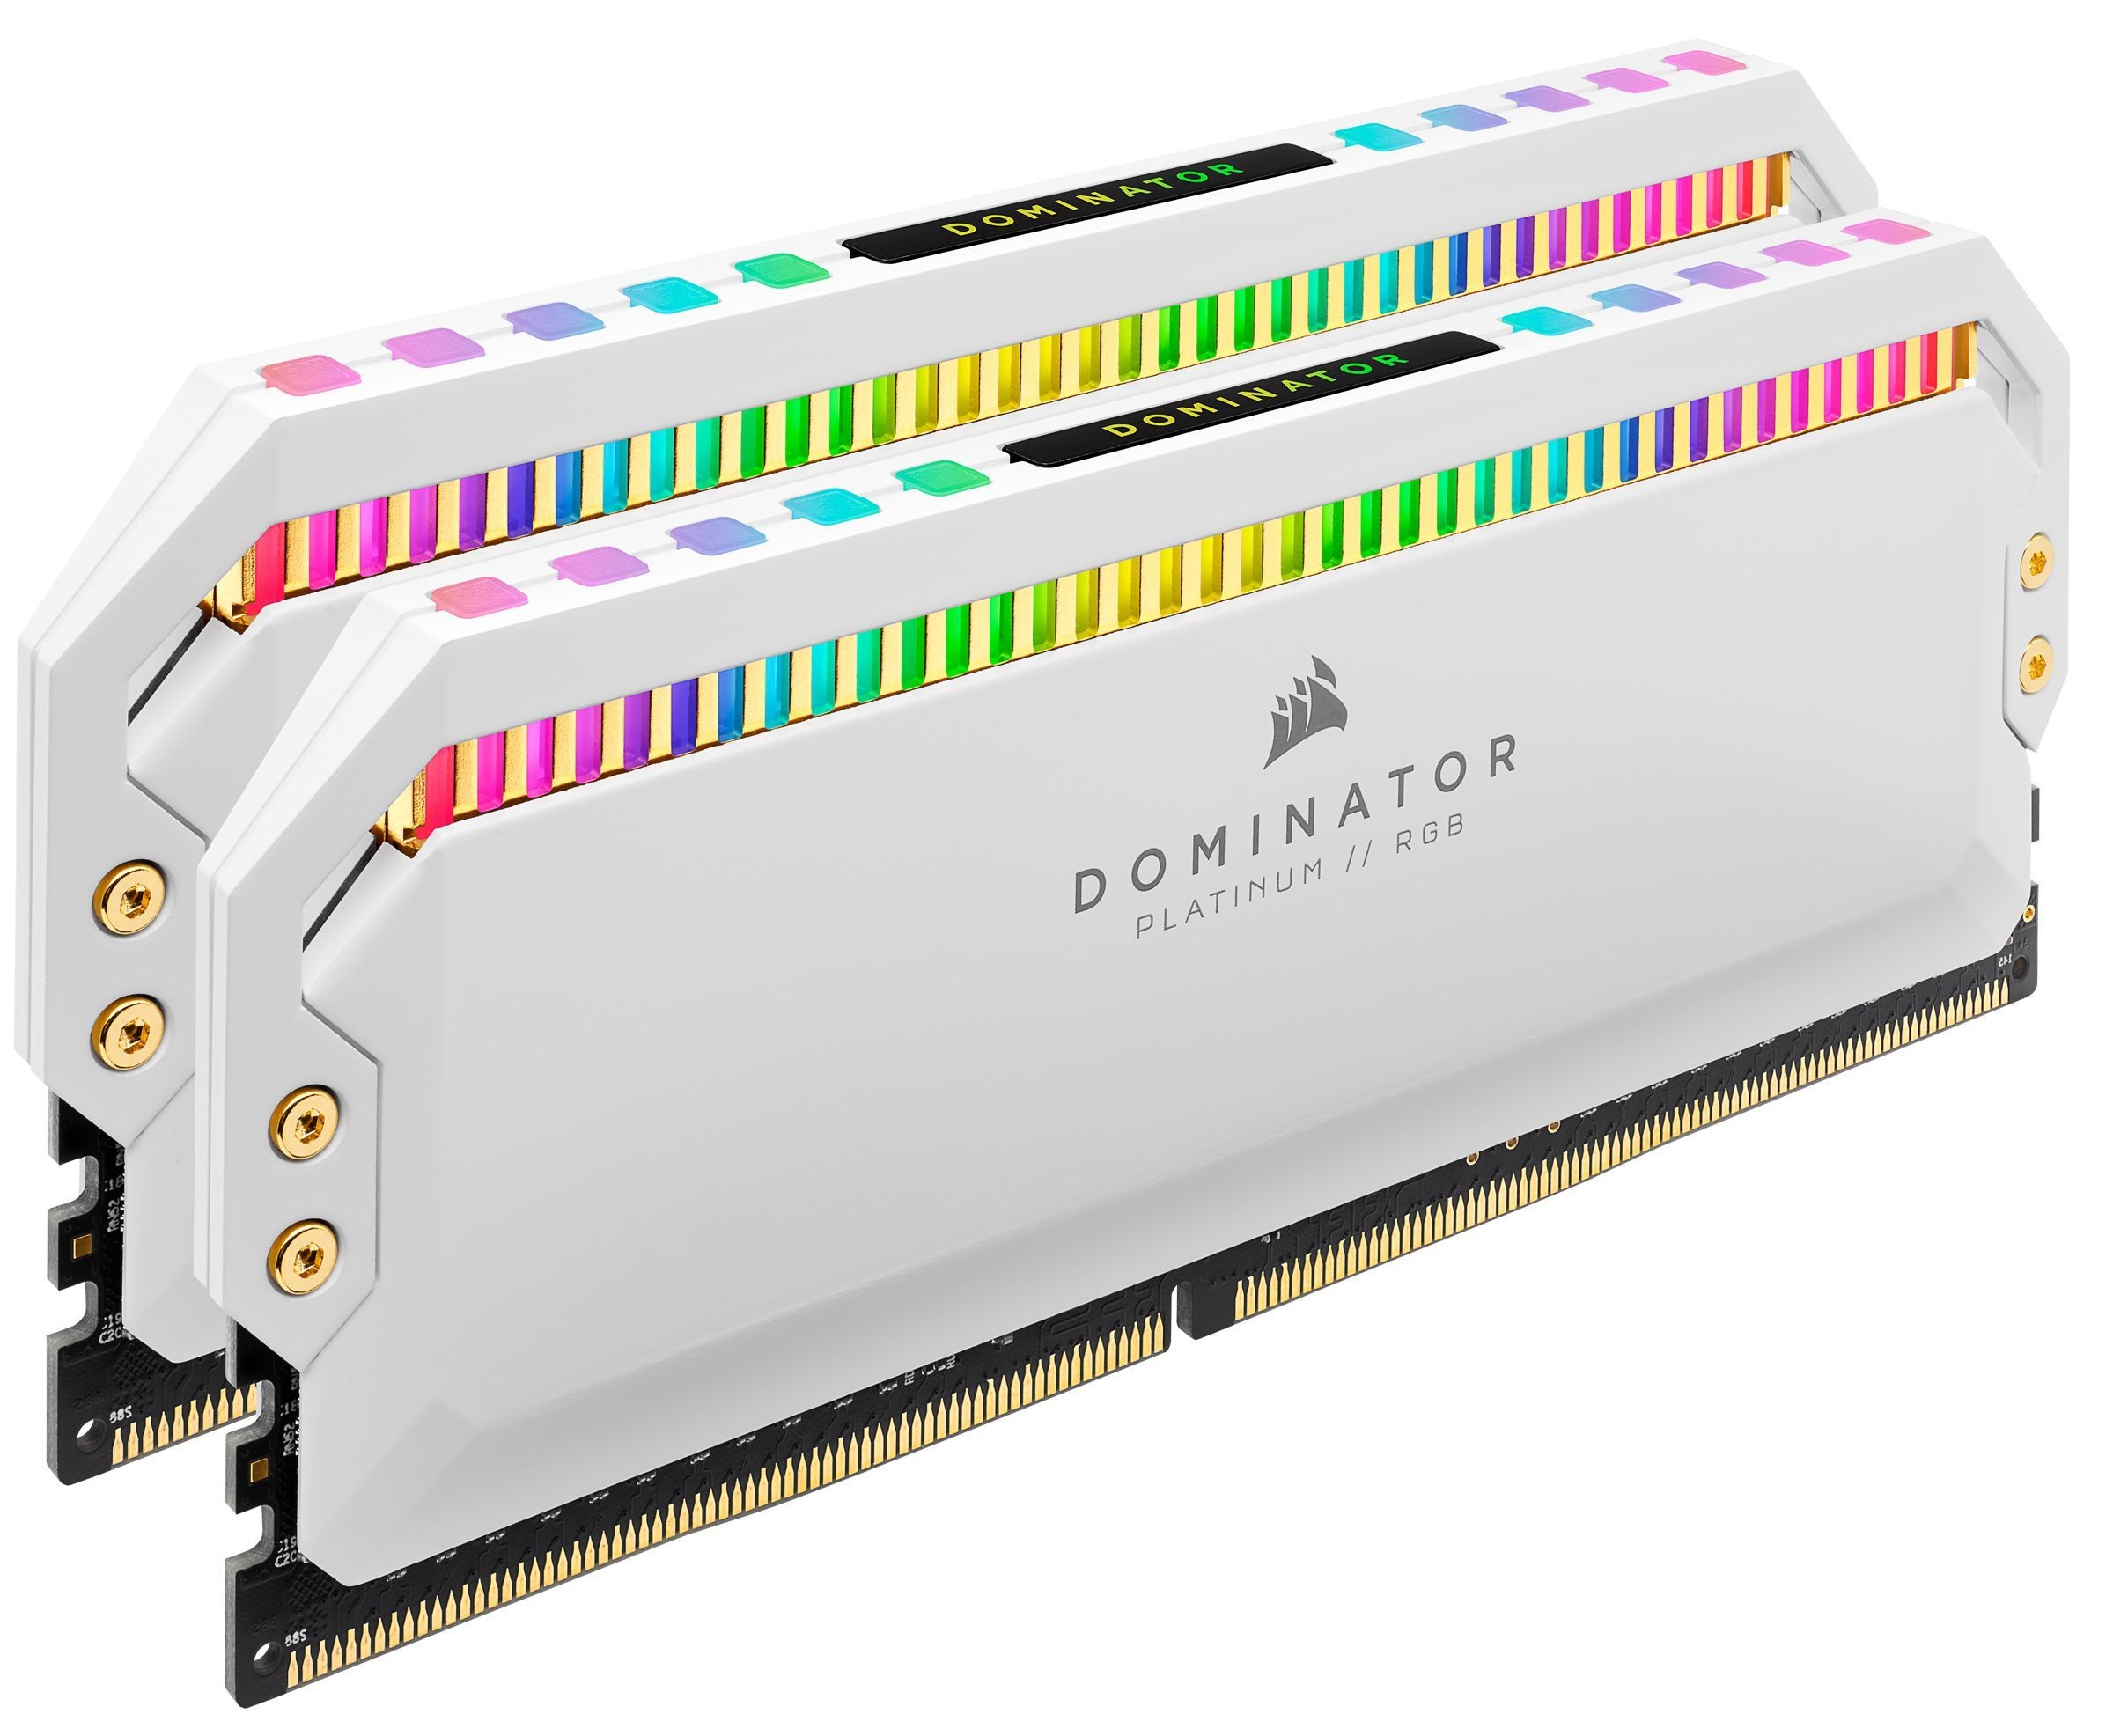 Dominator Platinum - 2 x 8 Go - DDR4 3200 MHz - RGB - Blanc